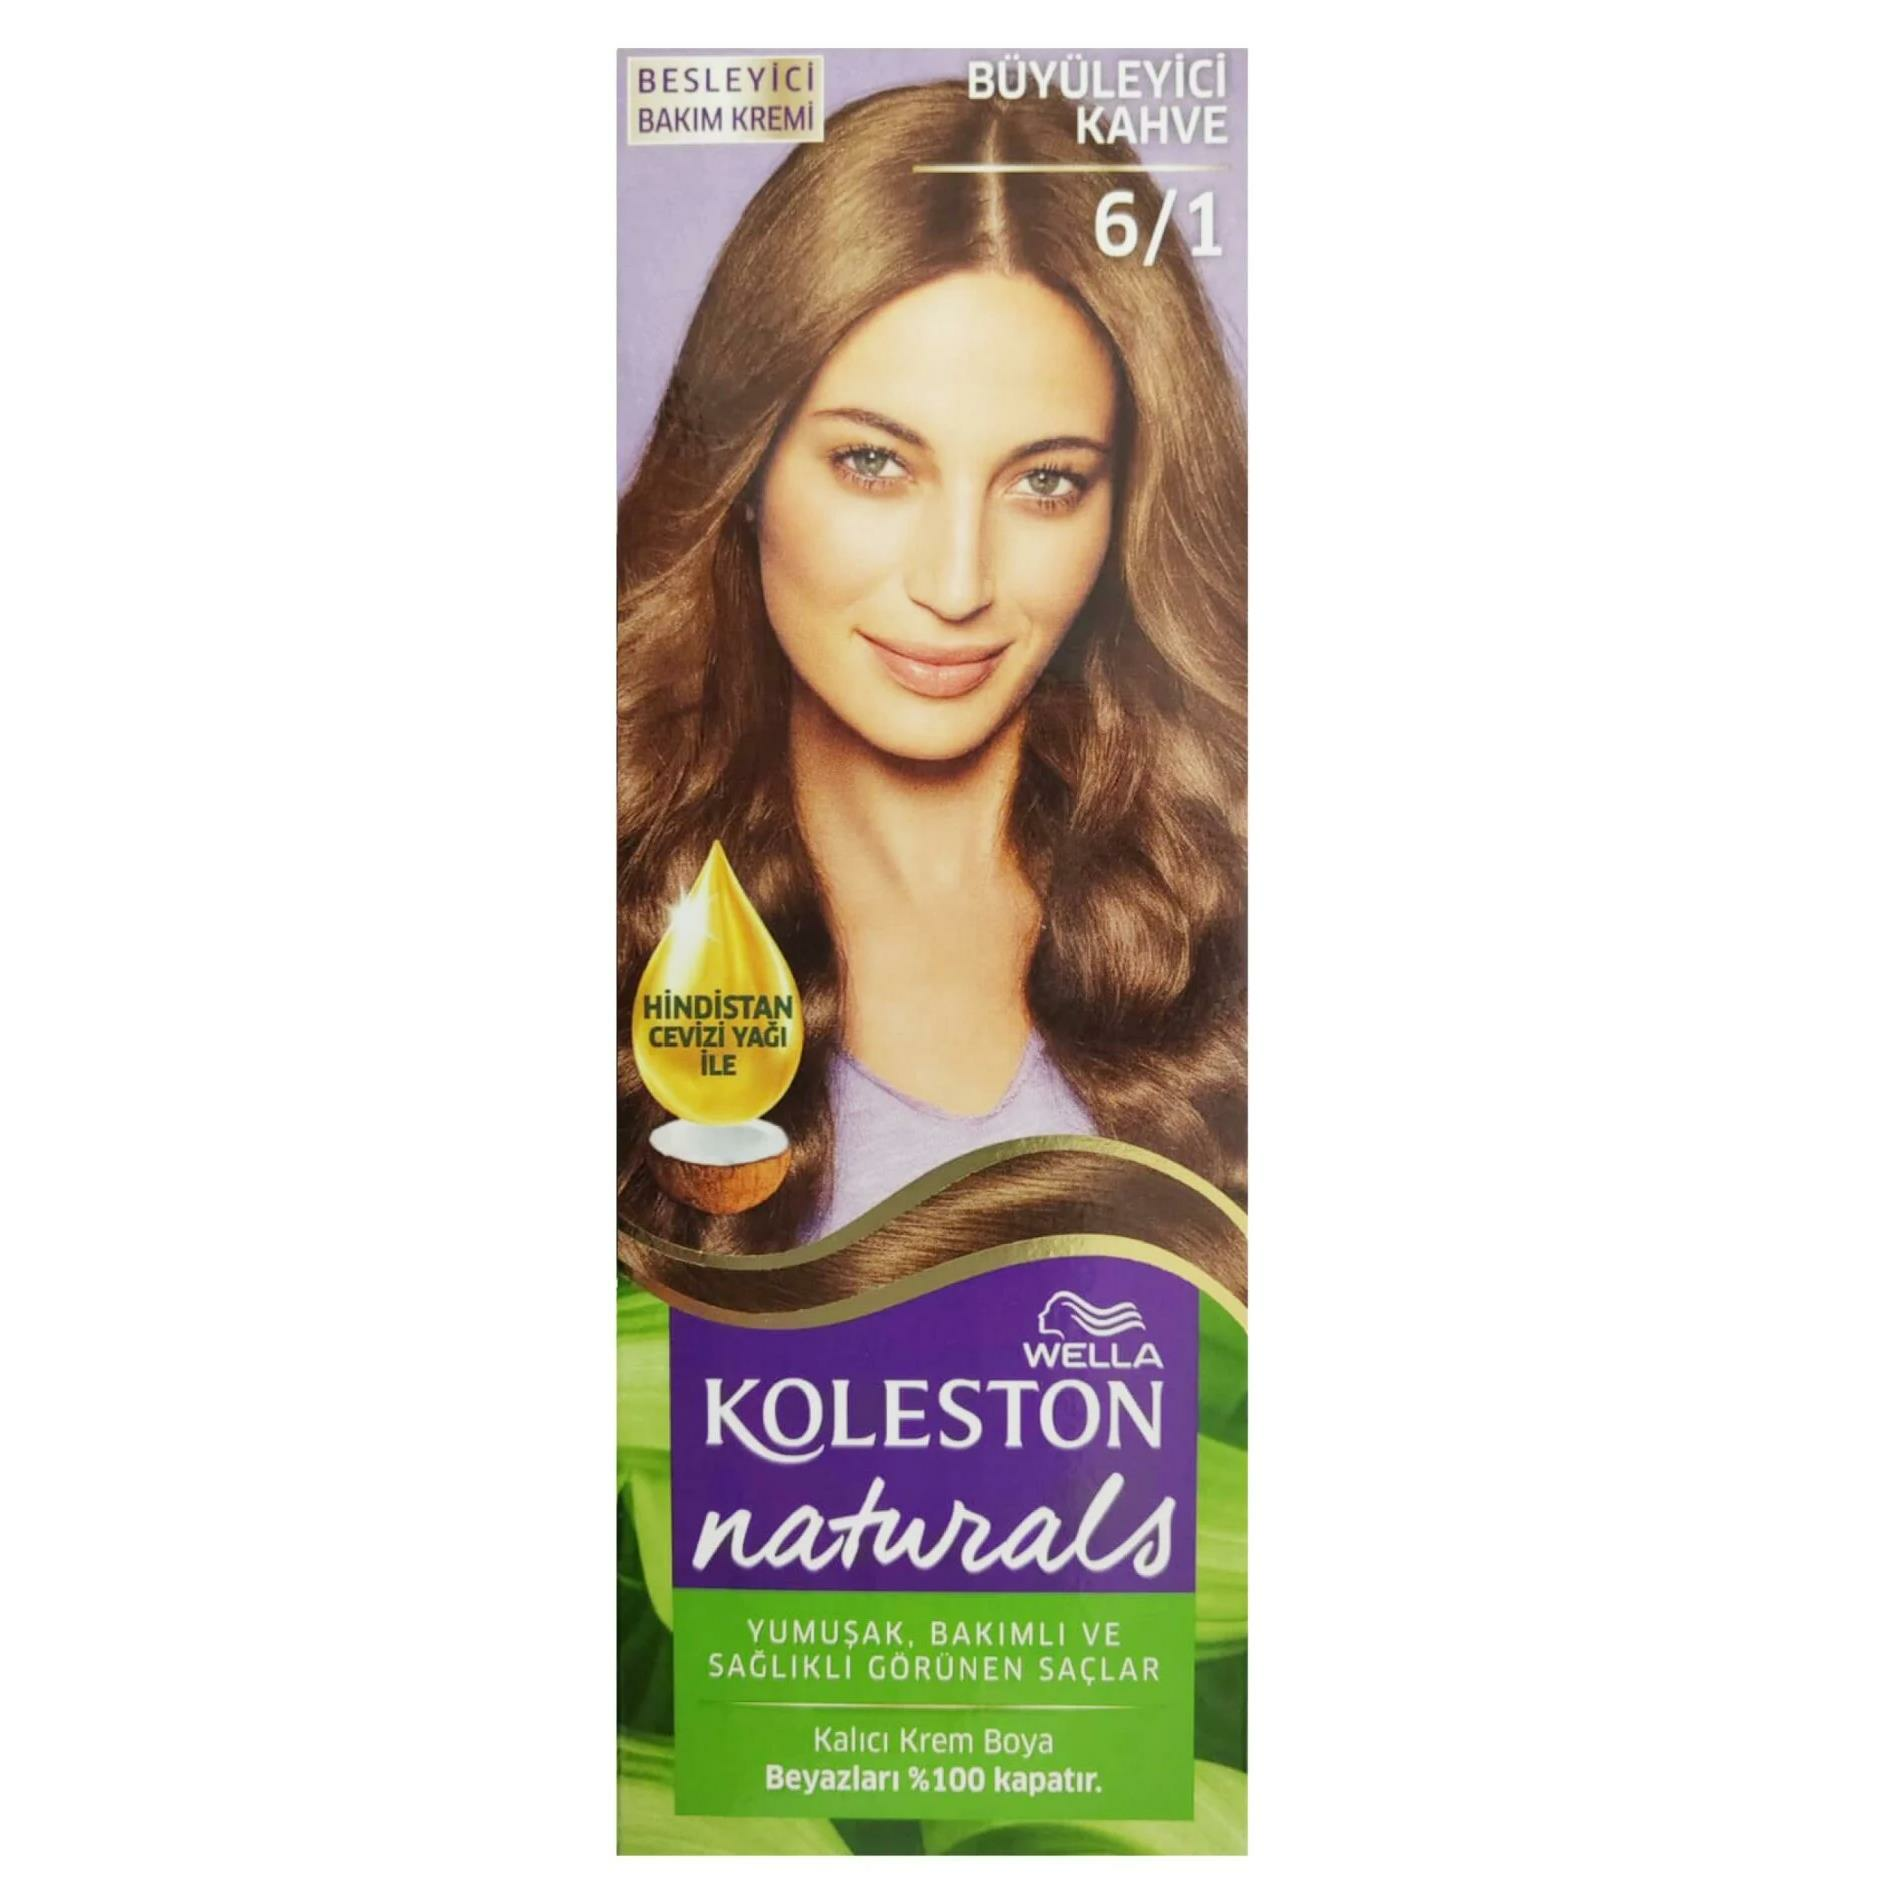 Koleston Naturals Saç Boyası 6/1 Büyüleyici Kahve